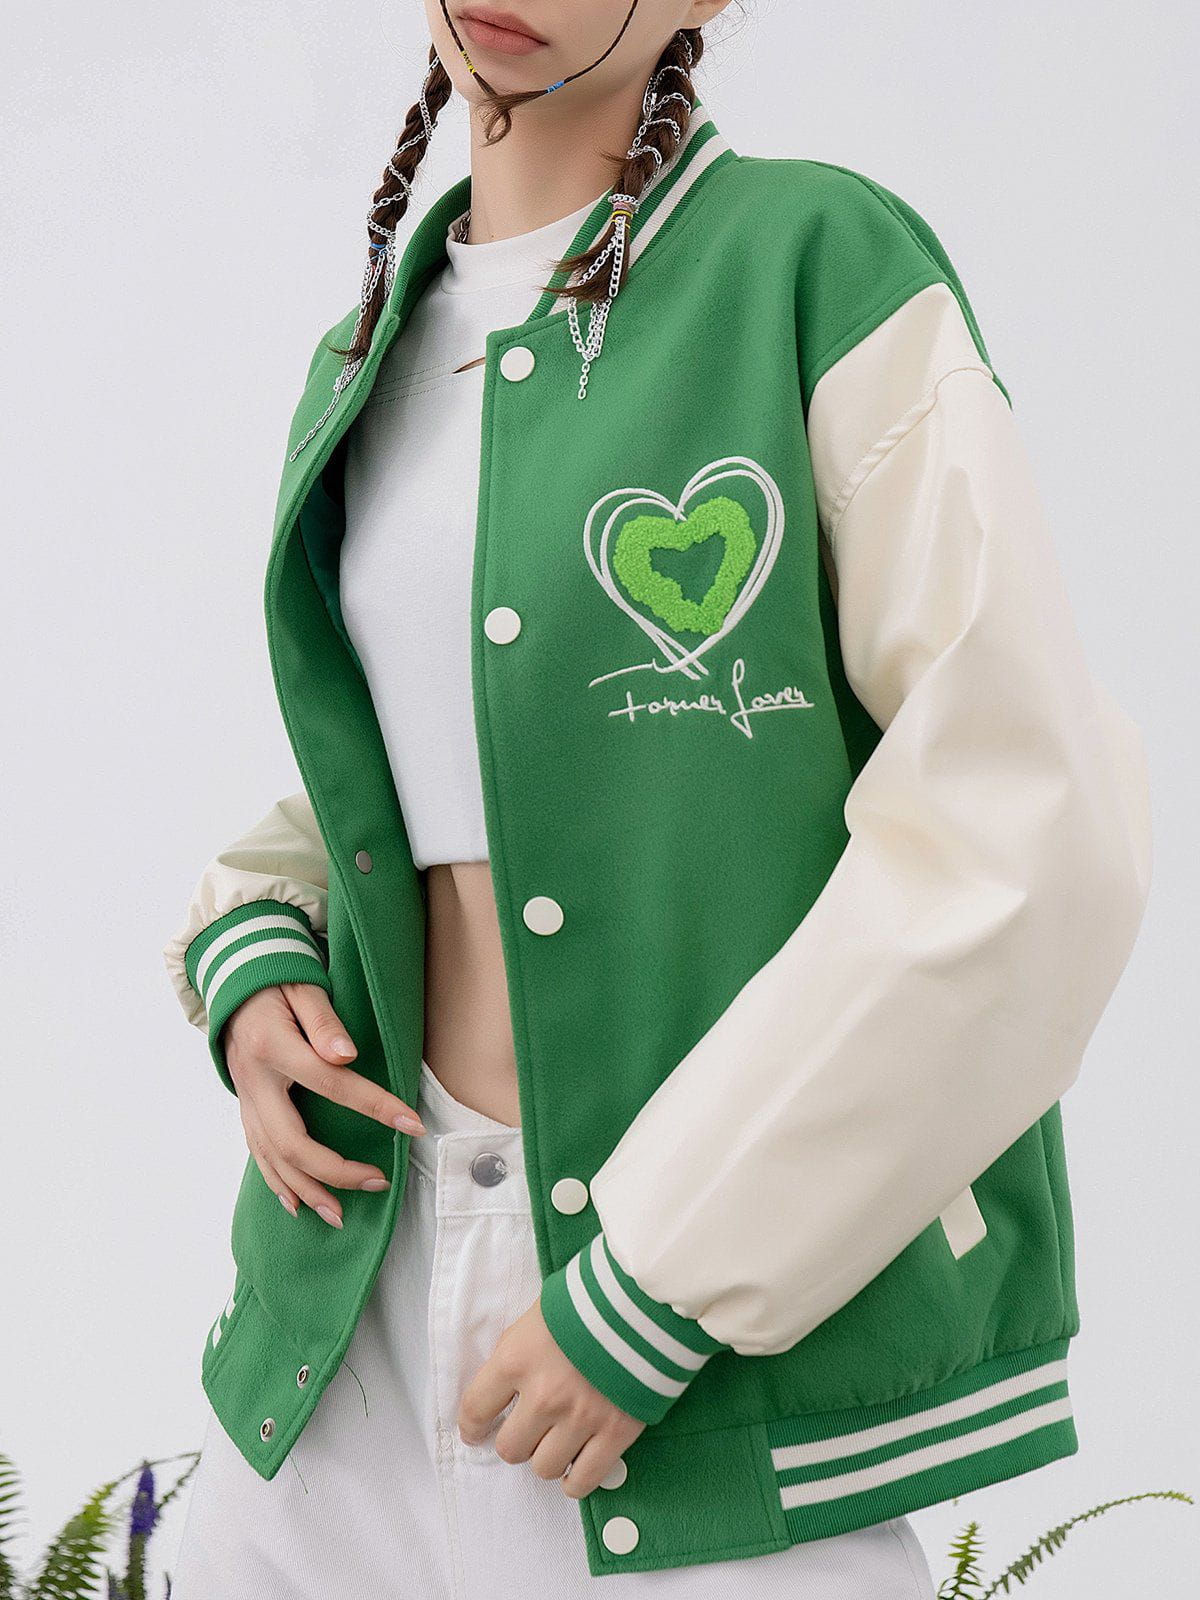 LUXENFY™ - Heart-shaped Print Varsity Jacket luxenfy.com